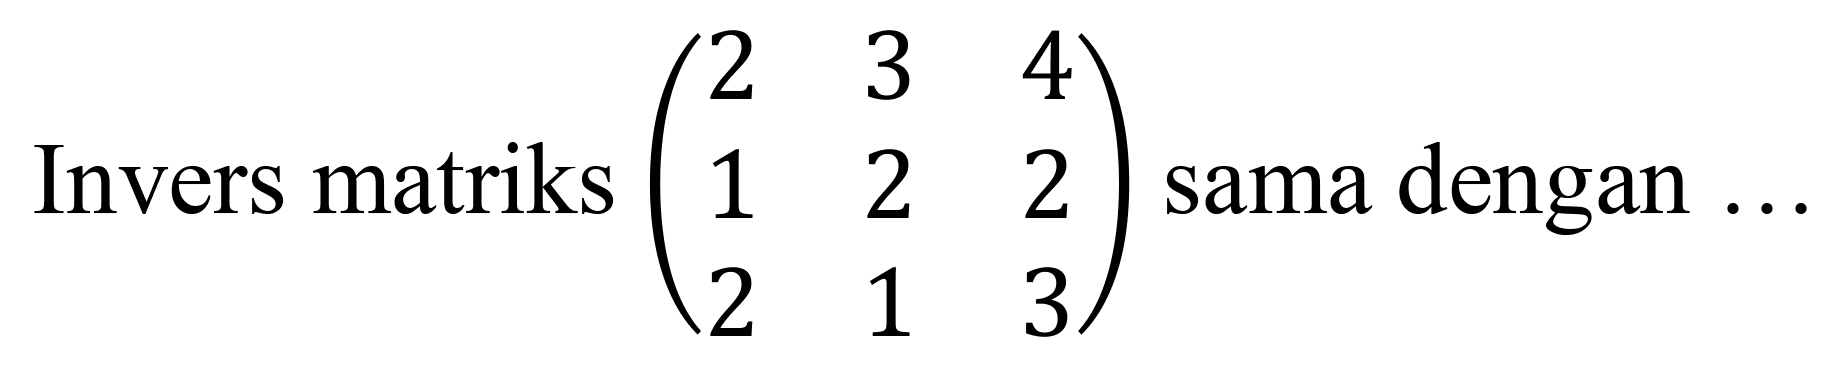 Invers matriks  (2  3  4  1  2  2  2  1  3)  sama dengan  . .